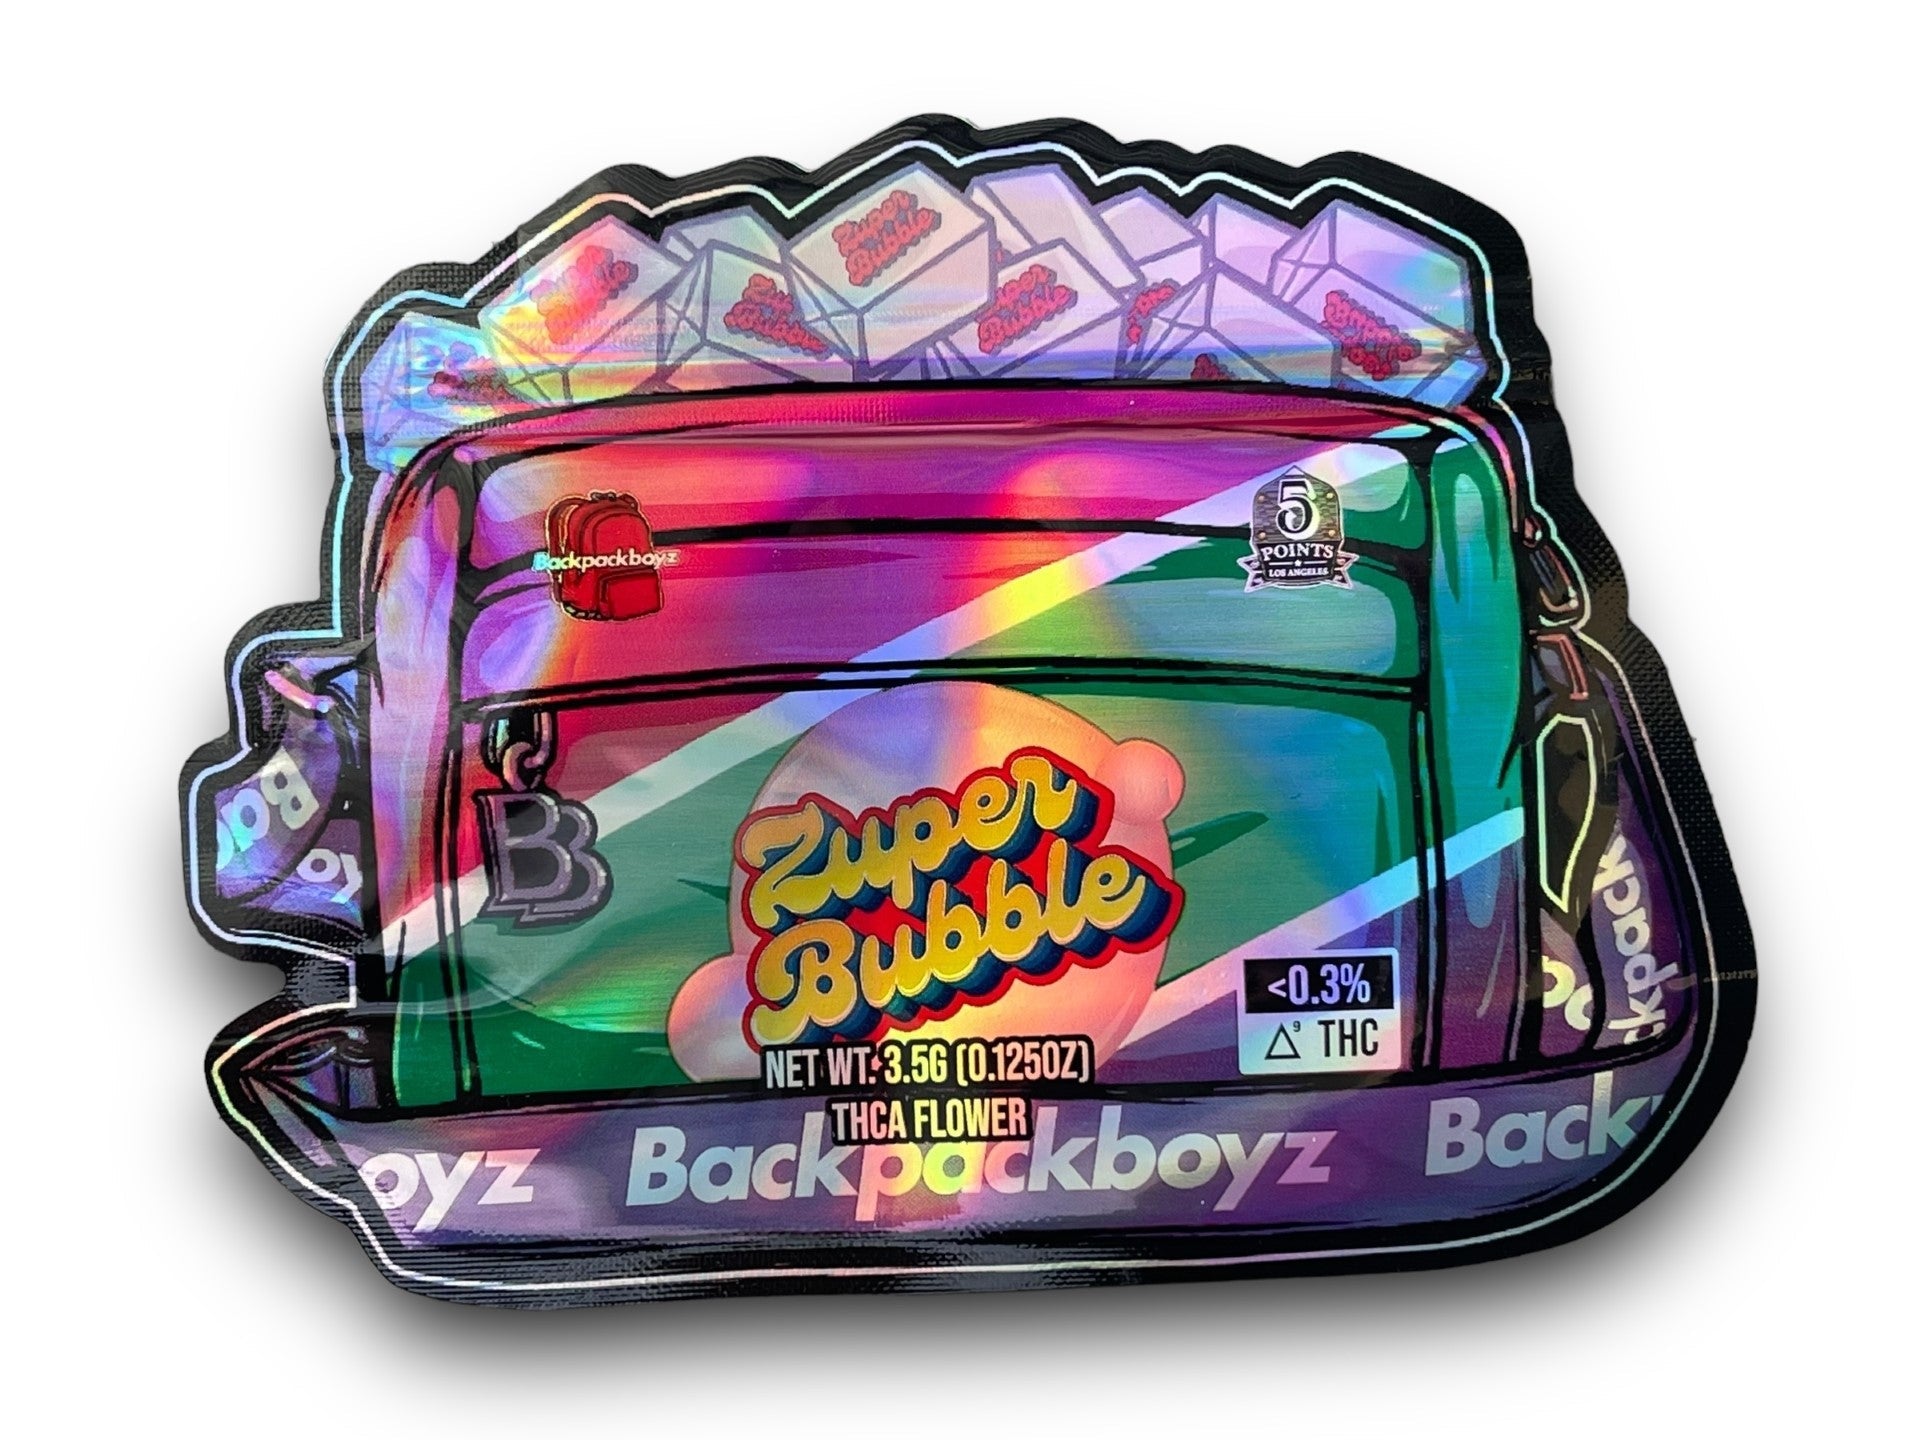 Backpack Boyz Zupper Bubble 3.5G Myar Bag